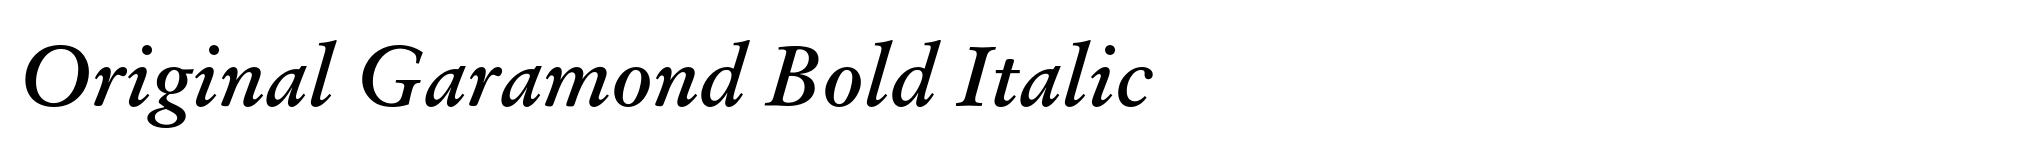 Original Garamond Bold Italic image